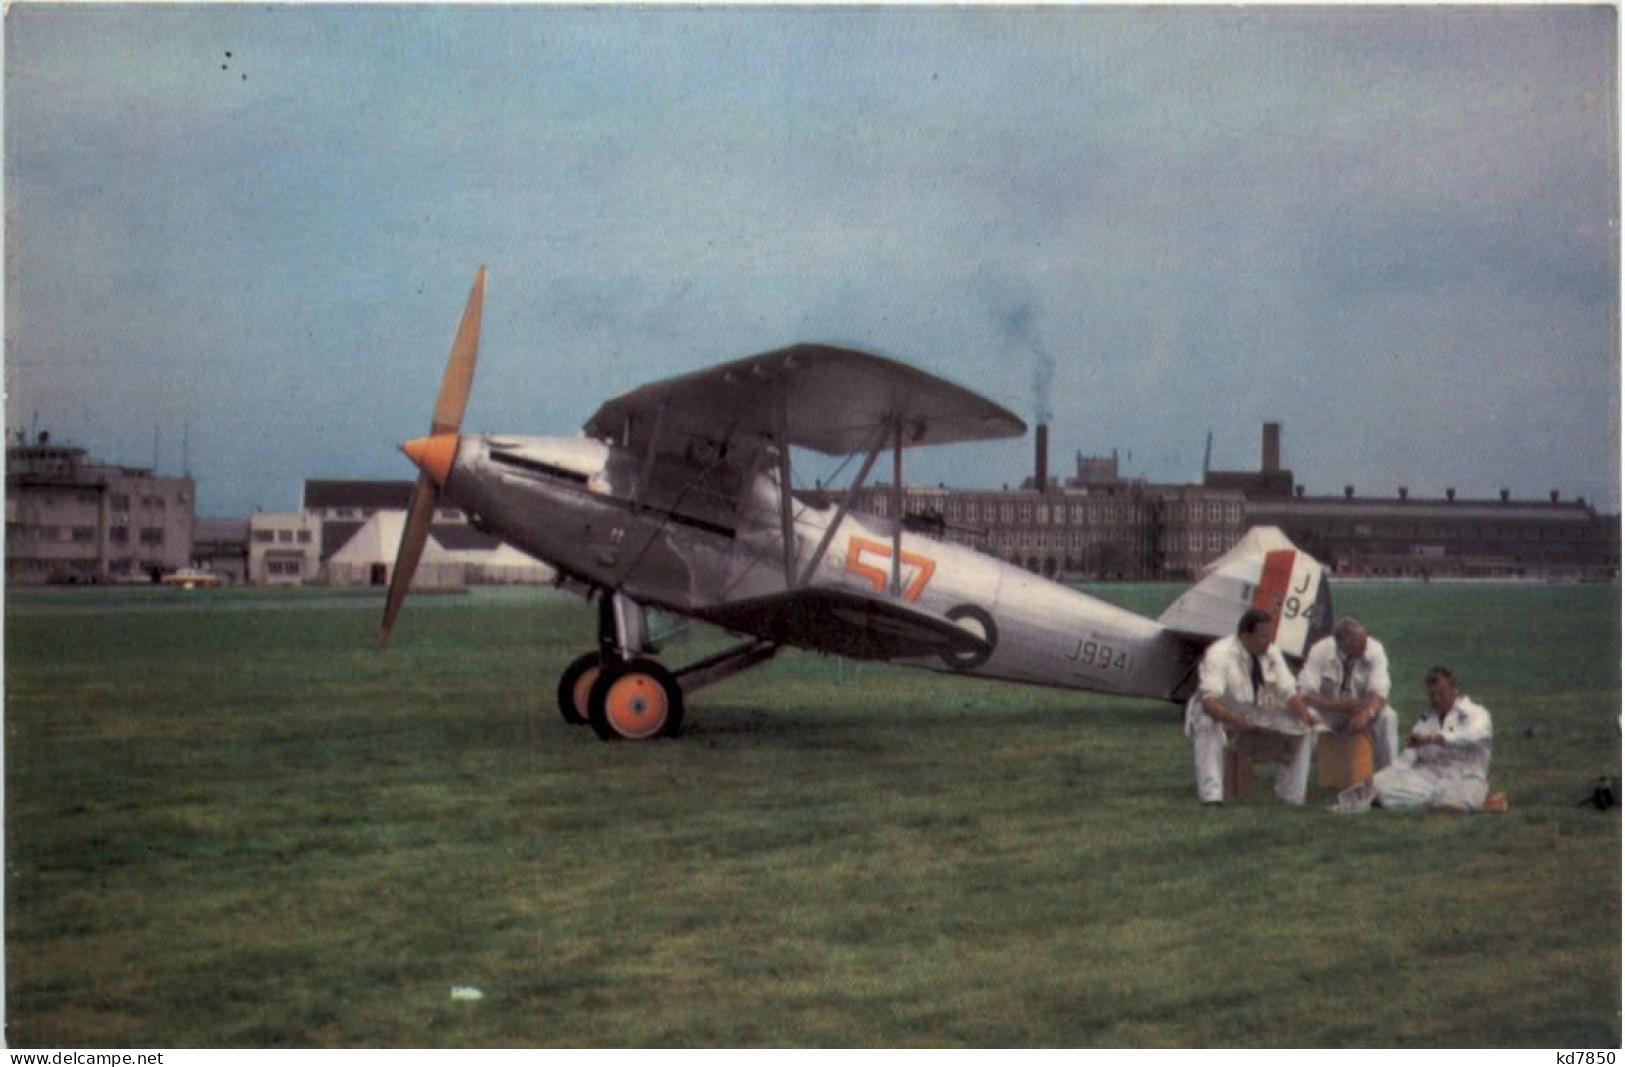 The Hawker Hart - 1919-1938: Between Wars